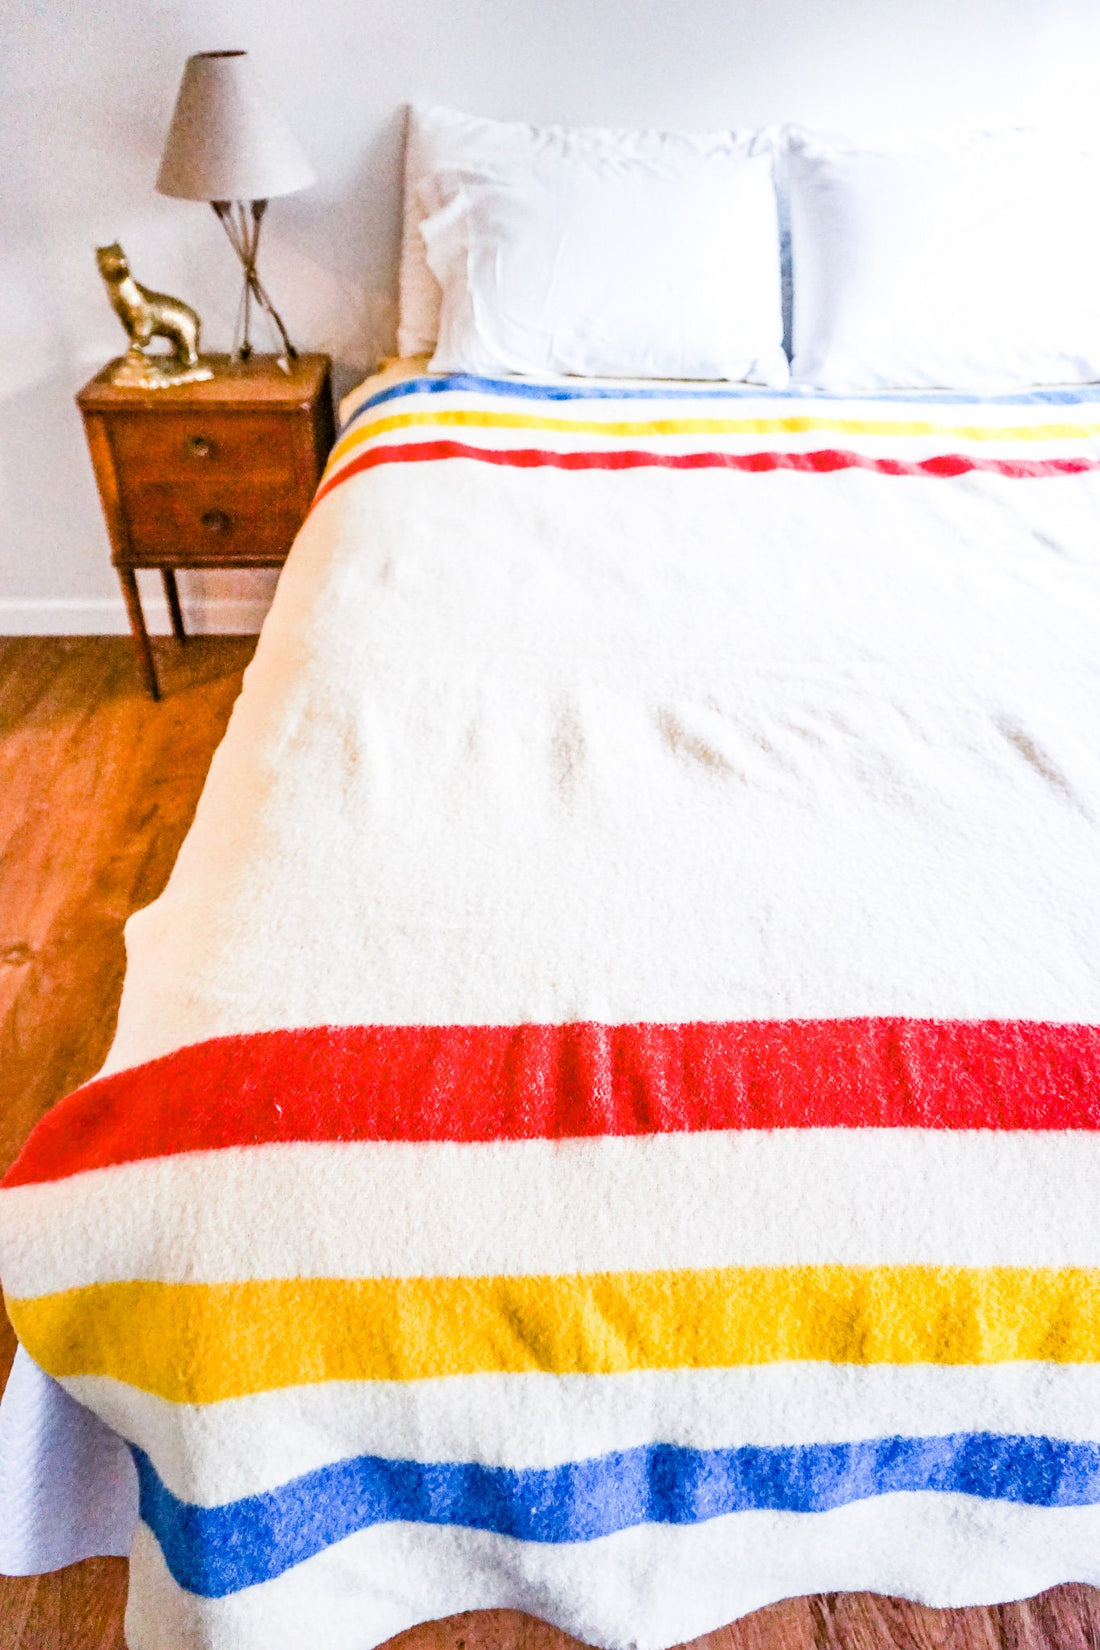 Wool Camp Blanket Hudson Bay Style